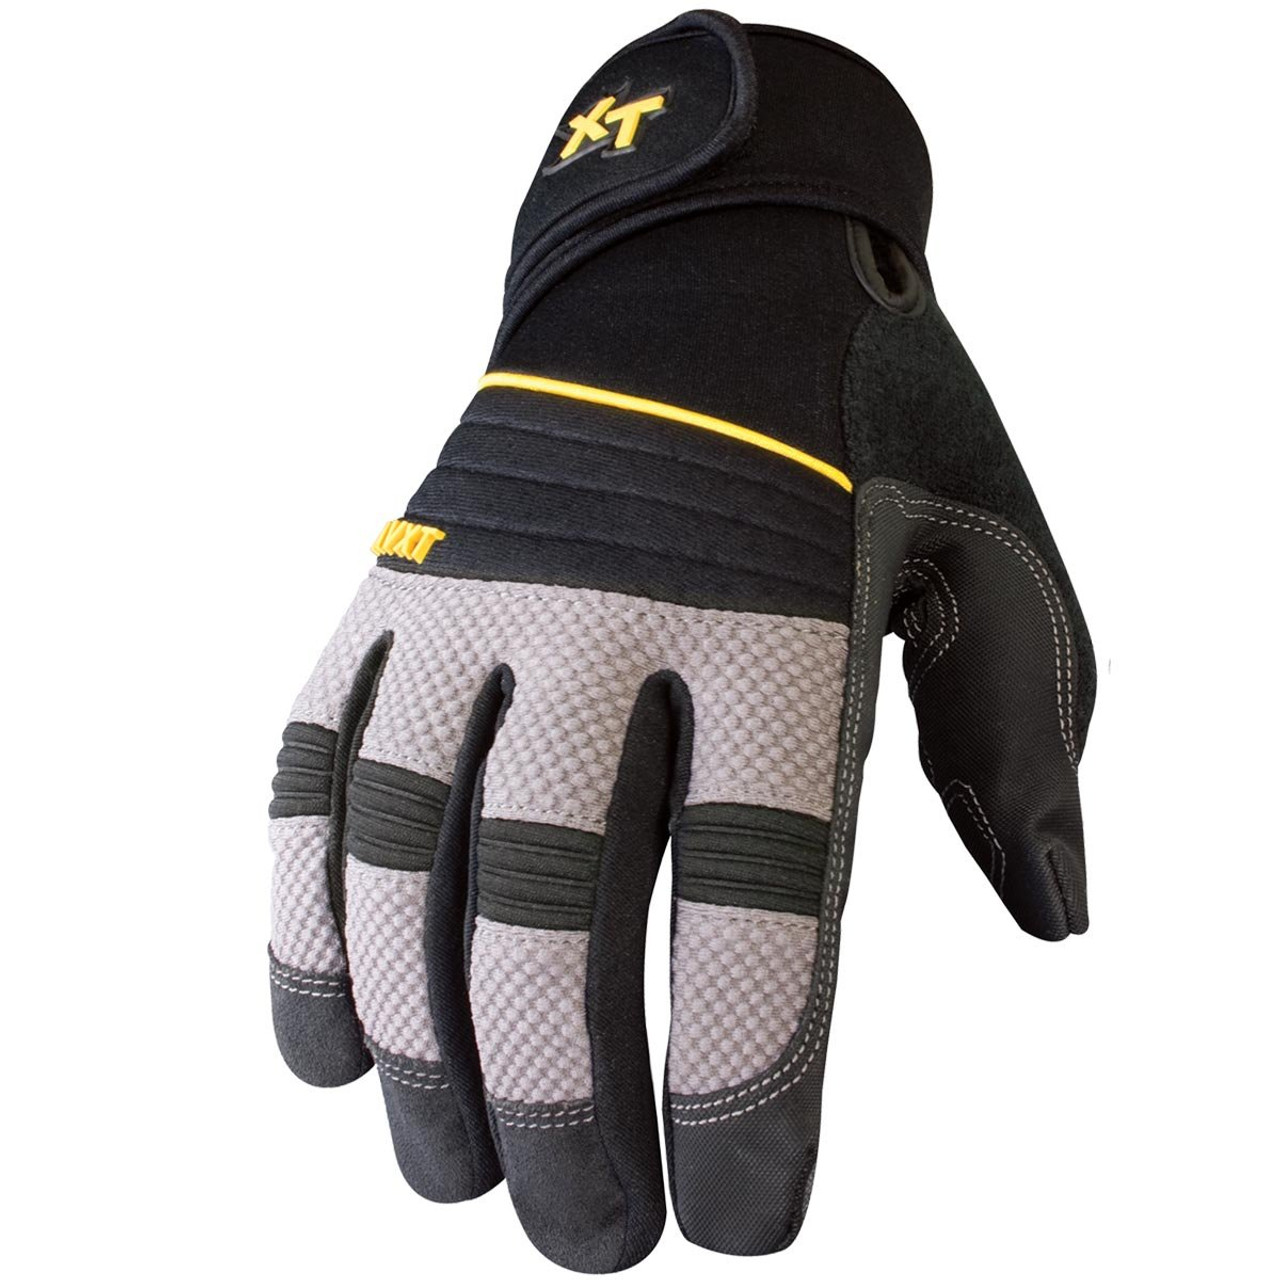 Youngstown Glove 03-3200-78-l gant de performance anti-vibration xt grand